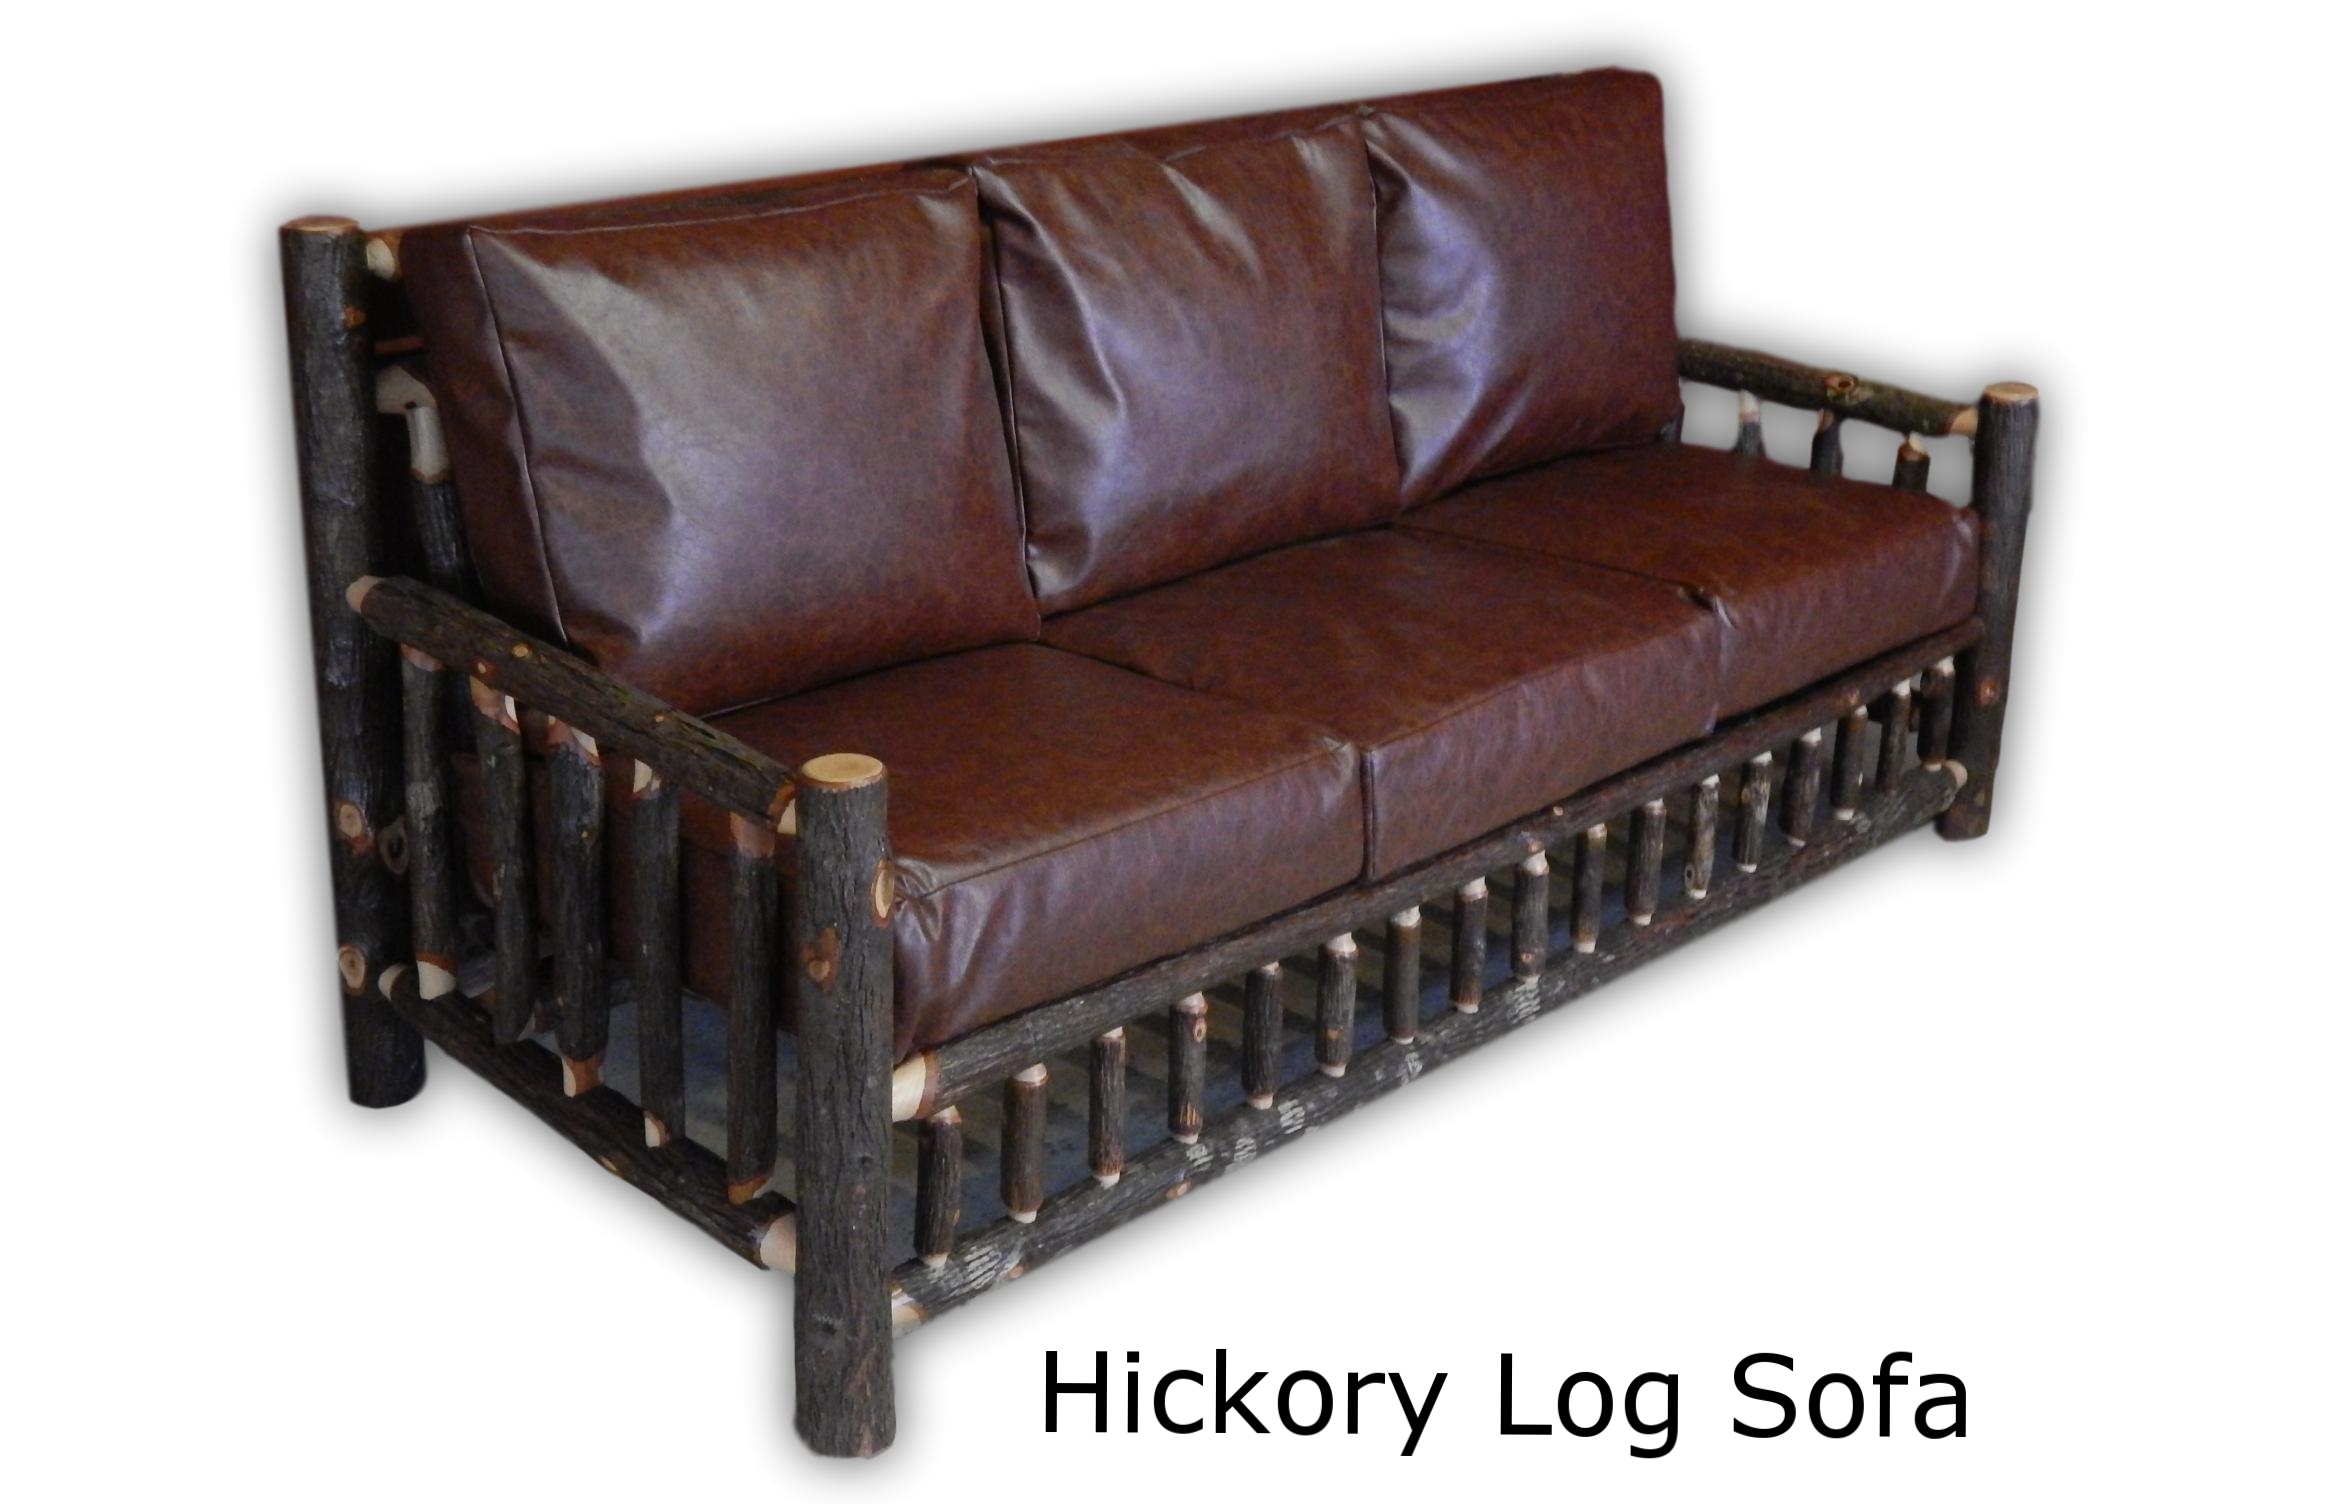 Hickory Log Sofa with Cushions